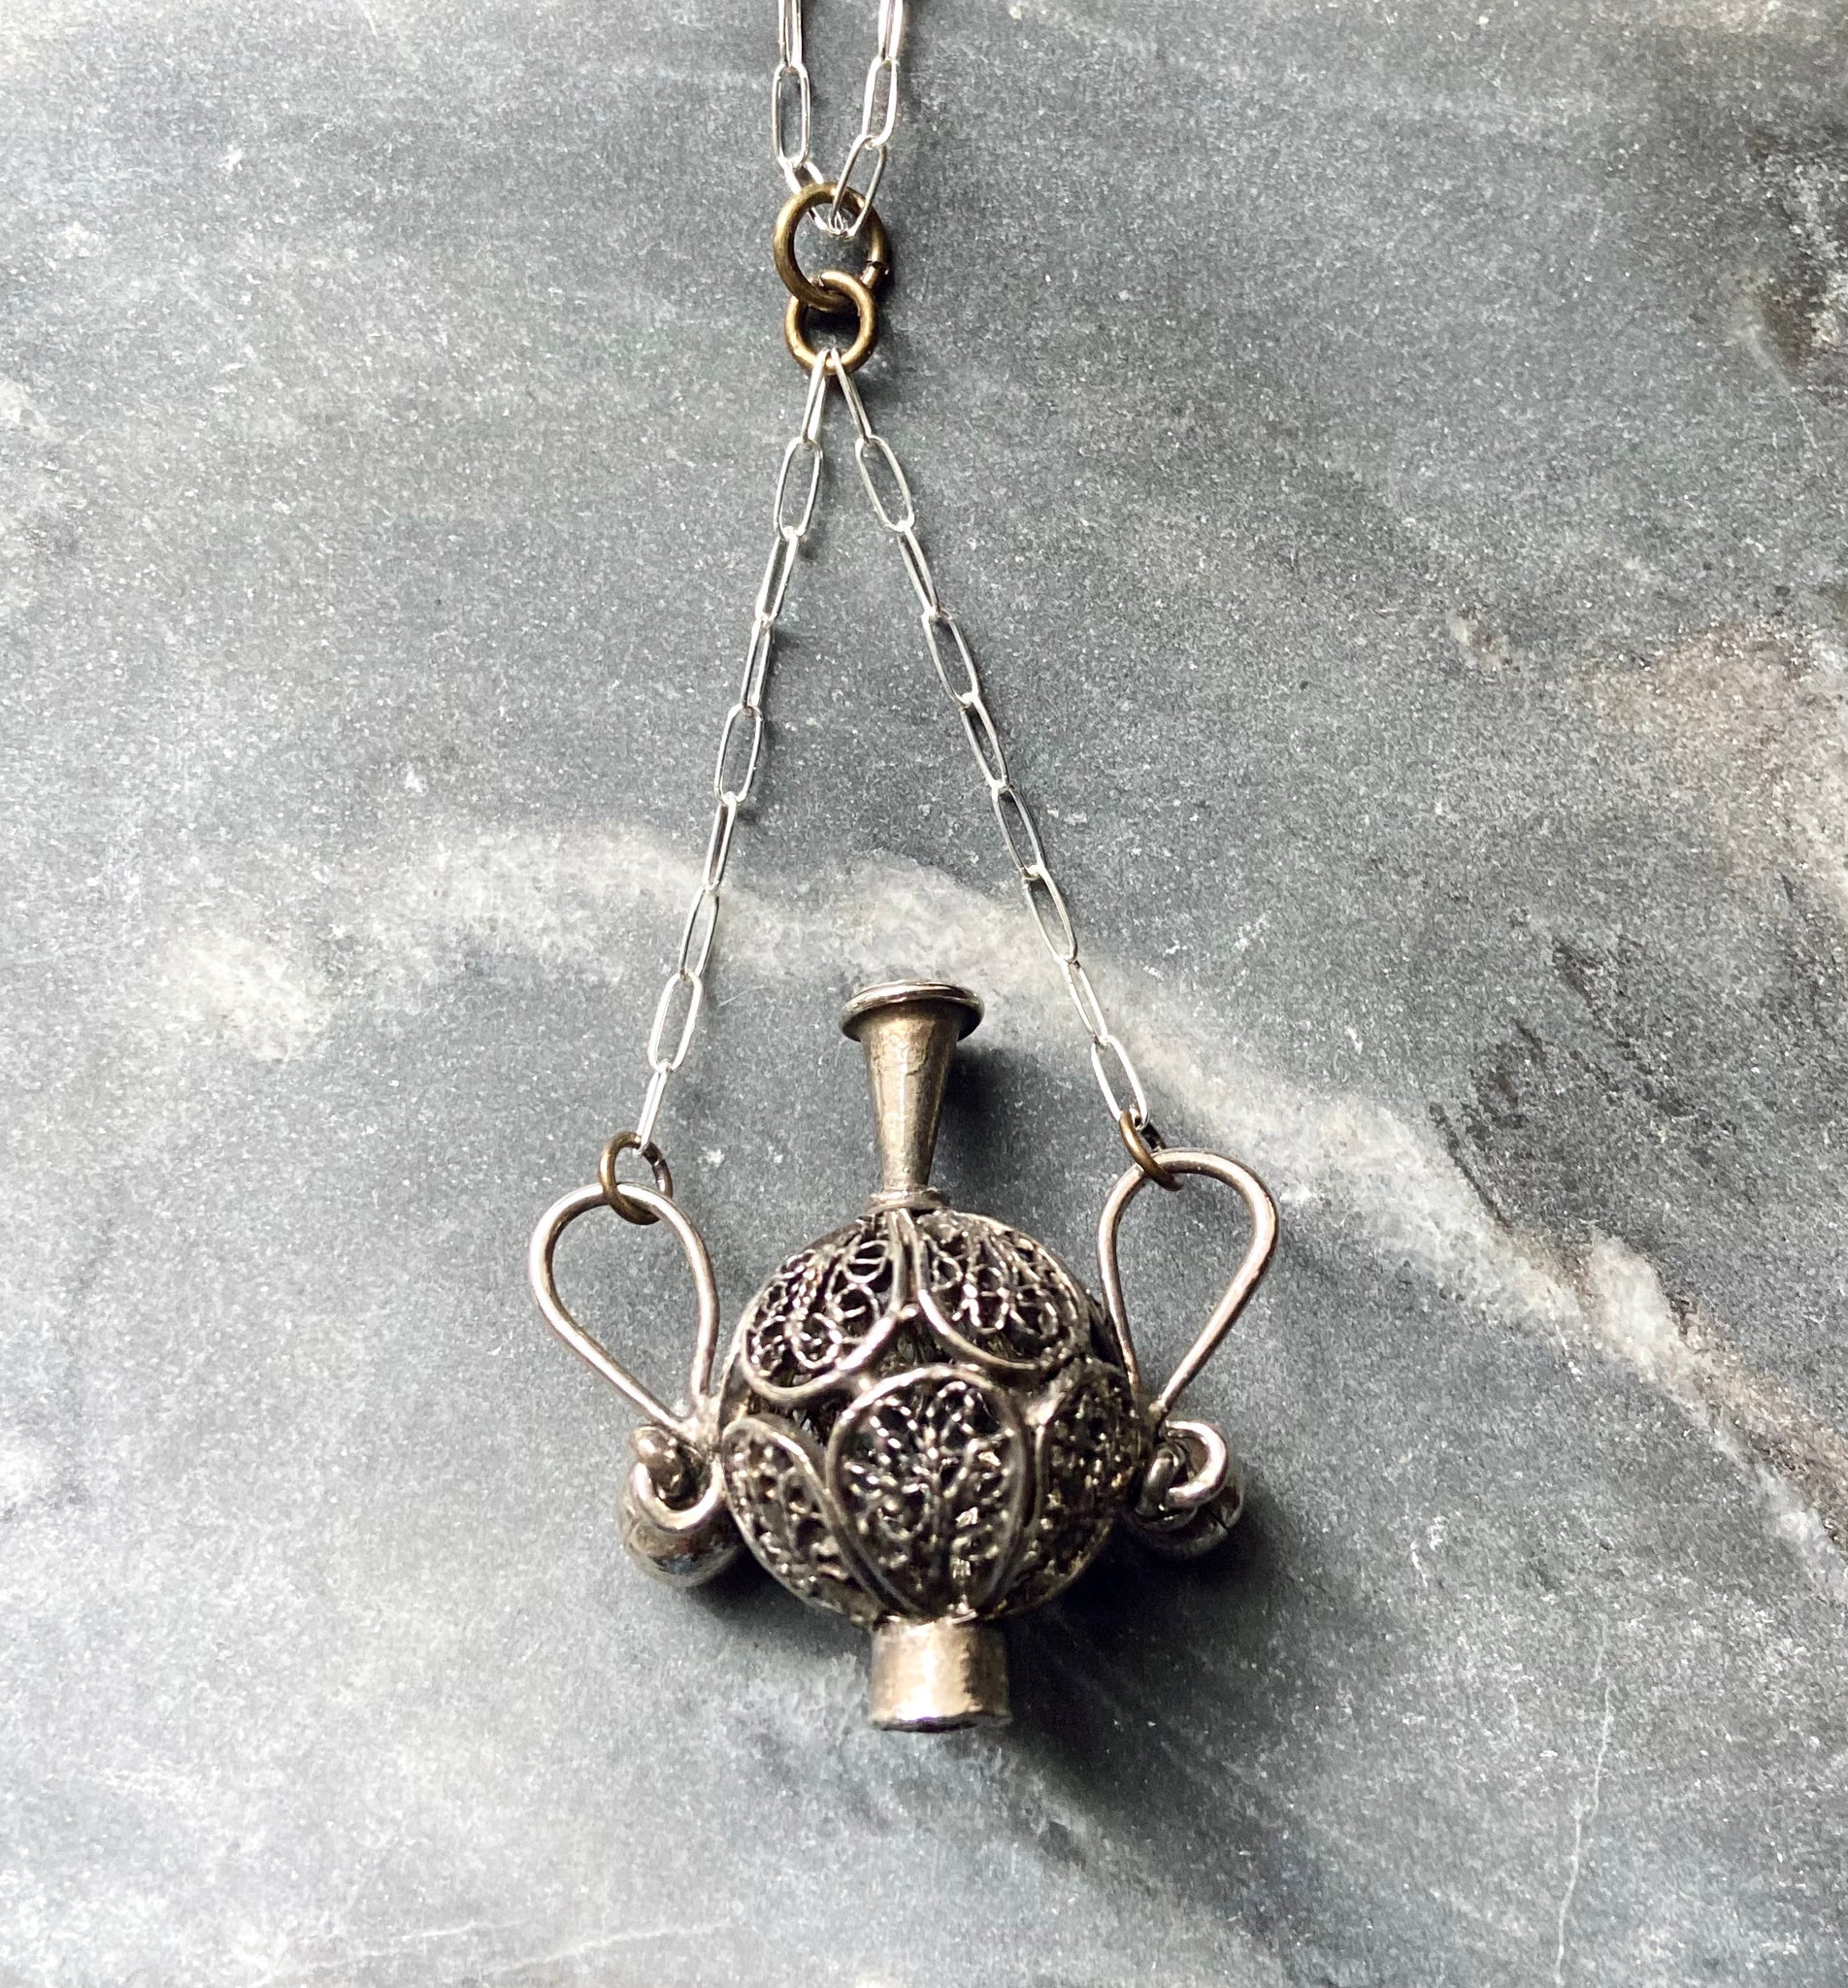 Vintage vessel charm necklace